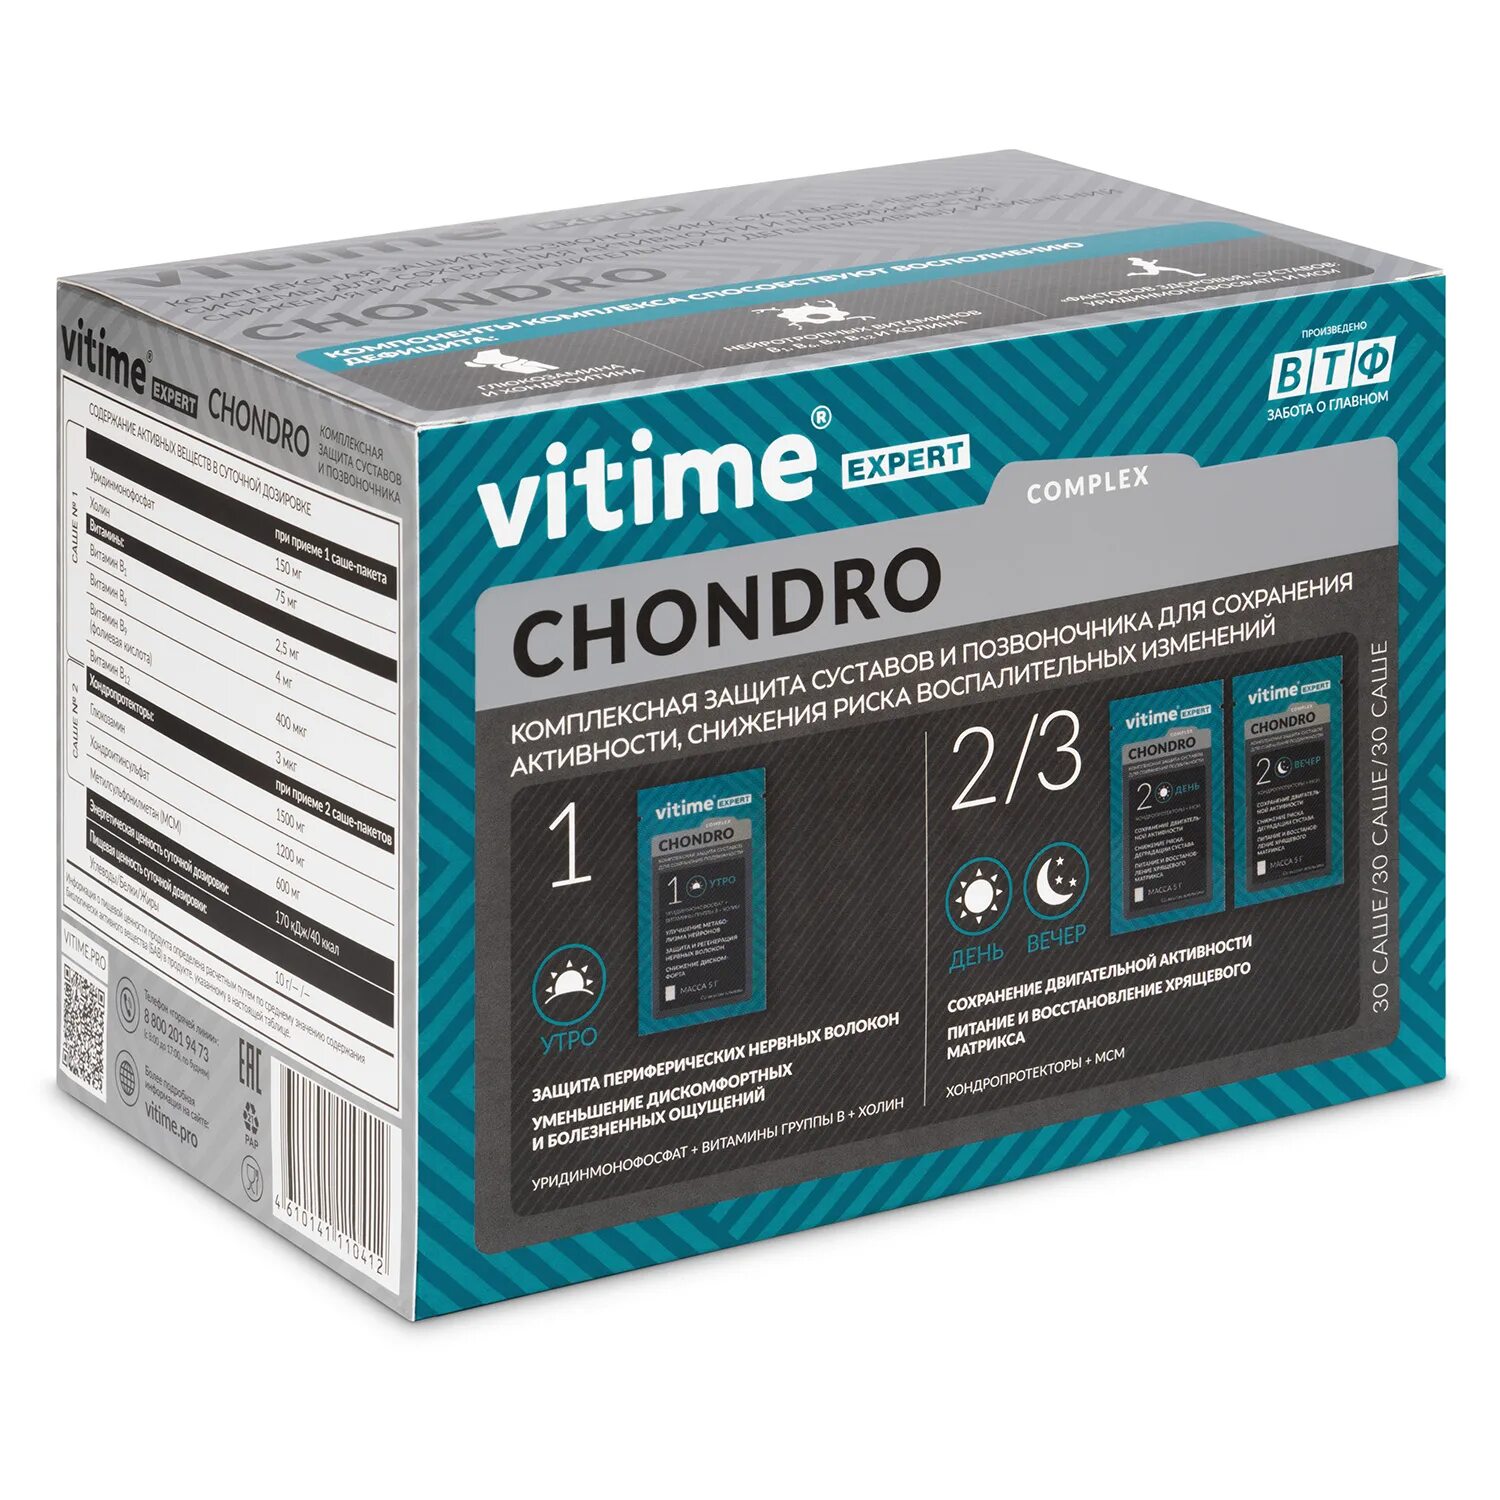 Vitime women. Комплекс Витайм эксперт Хондро. Vitime витамины. Vitime витамины для женщин. Vitime витамины для мужчин.